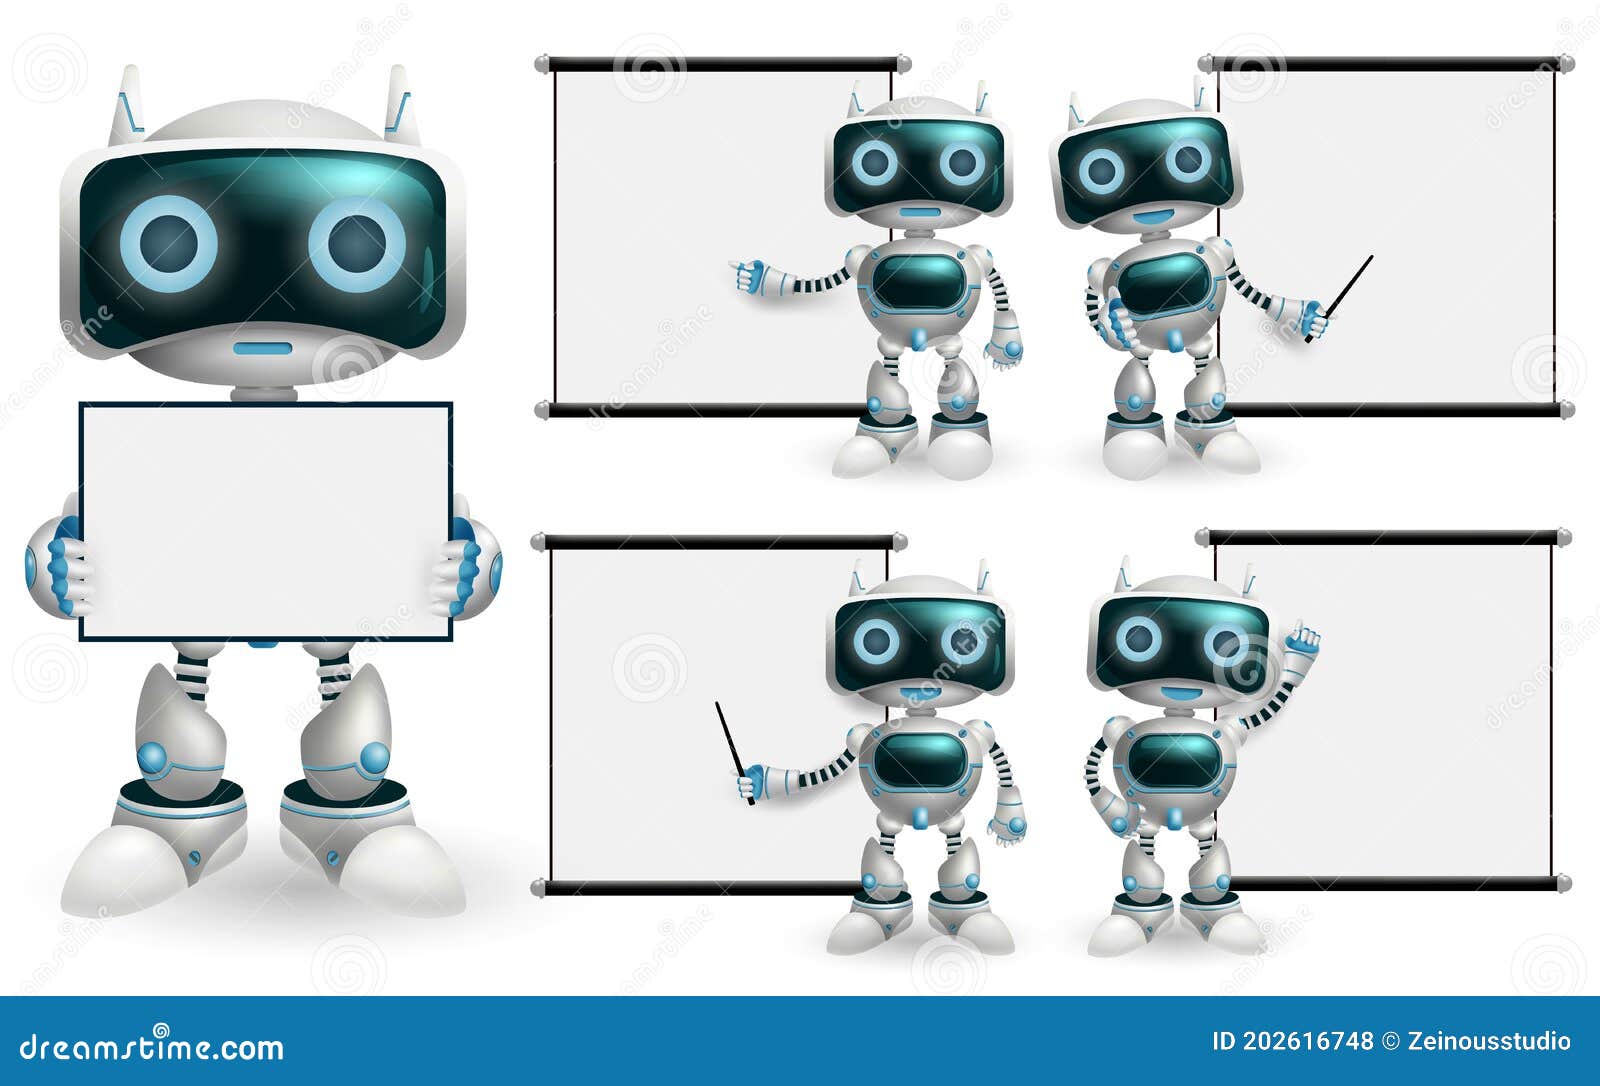 Robot Characters Presentation Vector Set. Robots Character With Robotic ...